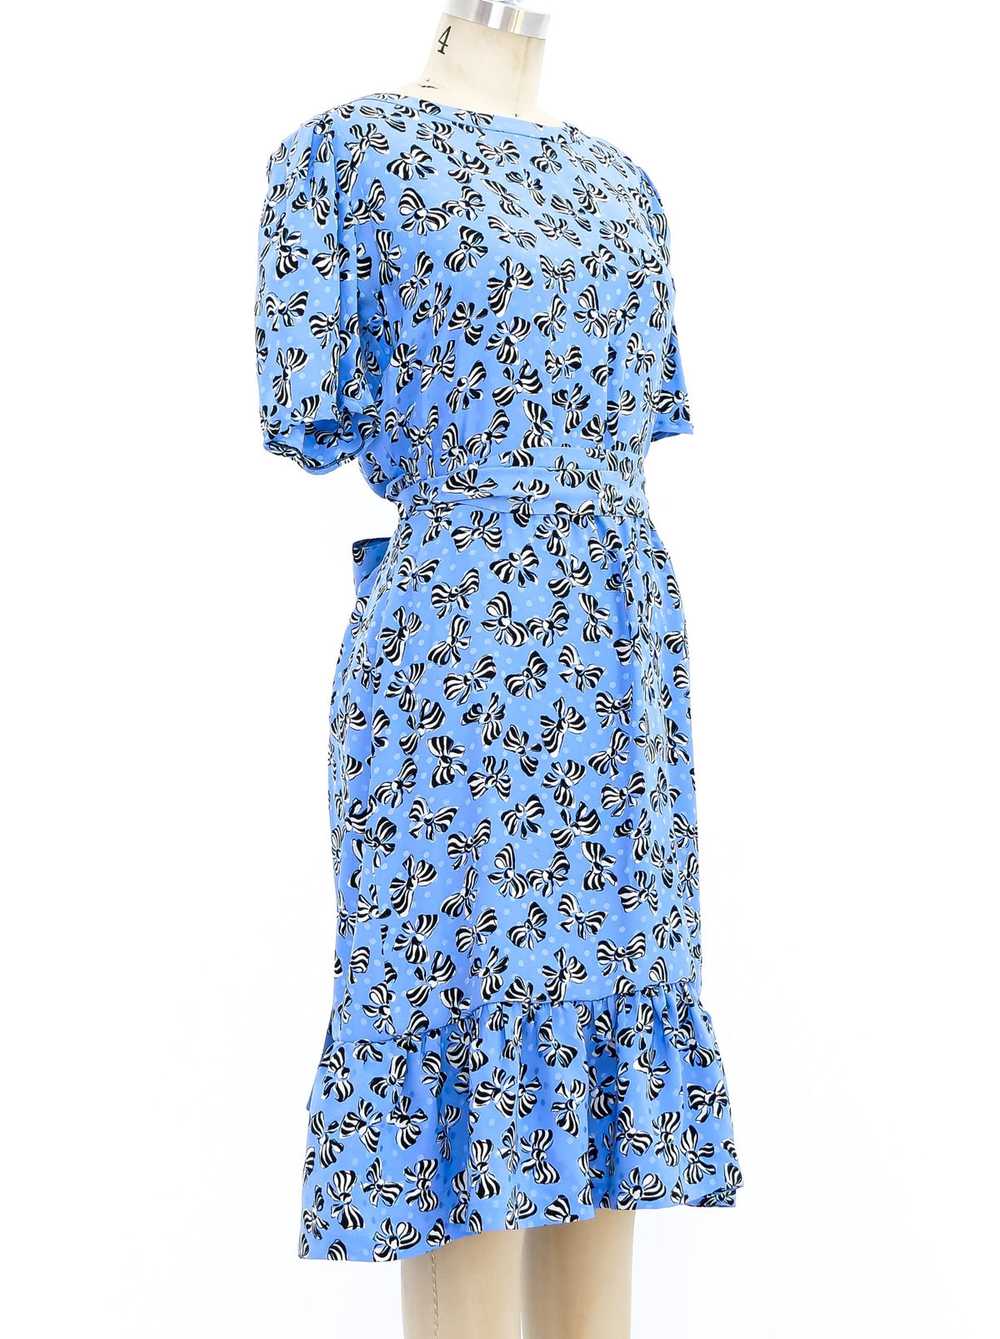 Yves Saint Laurent Bow Print Dress - image 3